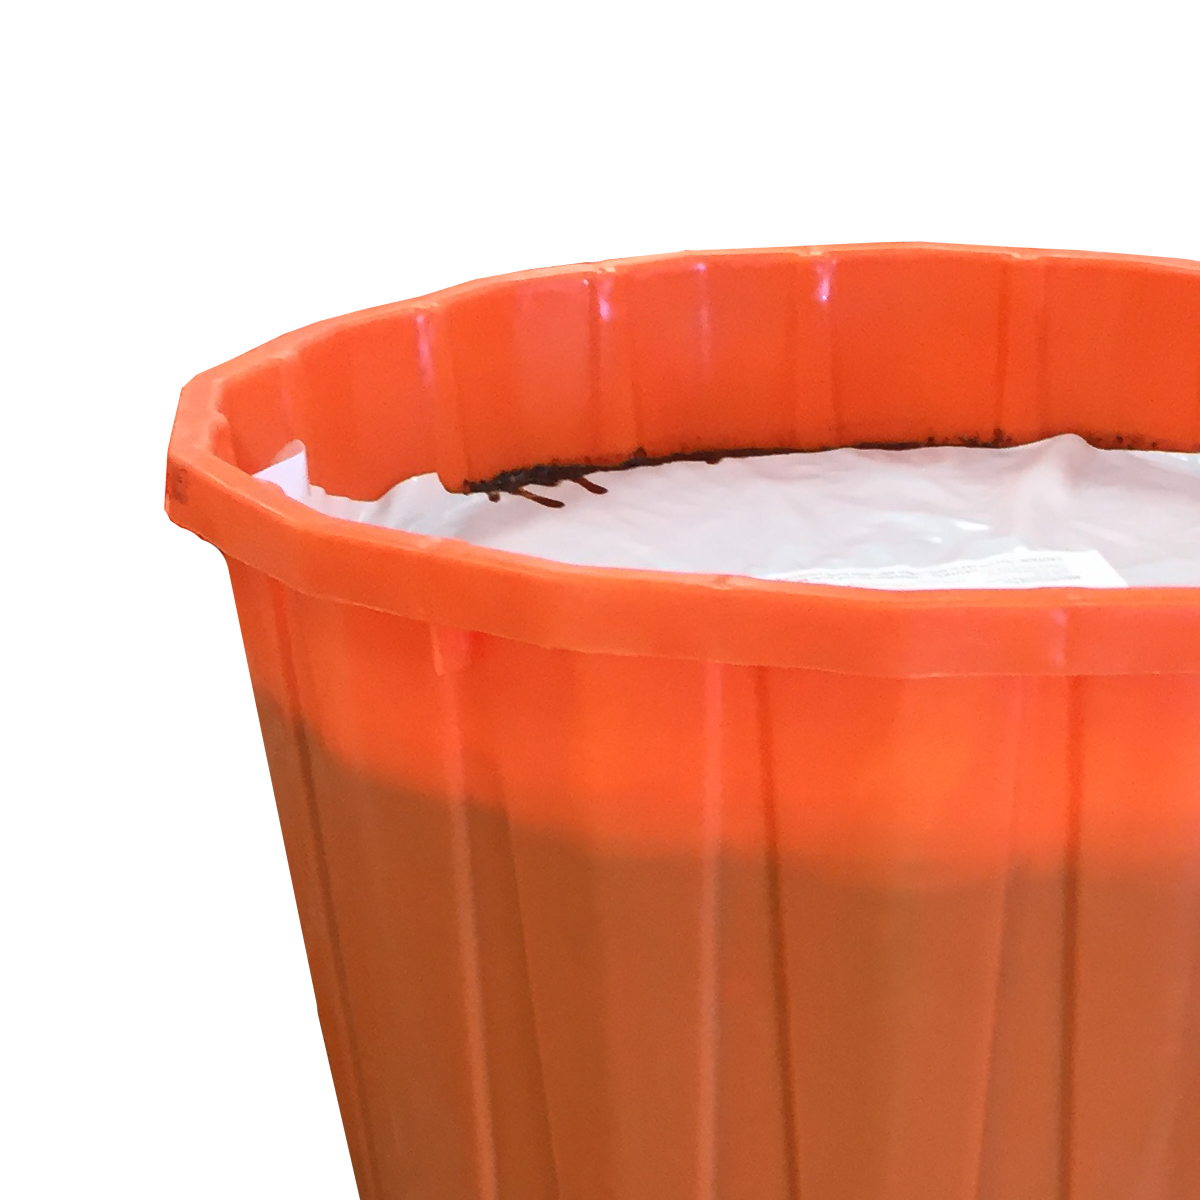 Prostock™ Low Moisture Tub - Orange - 2:1 - 113 kg